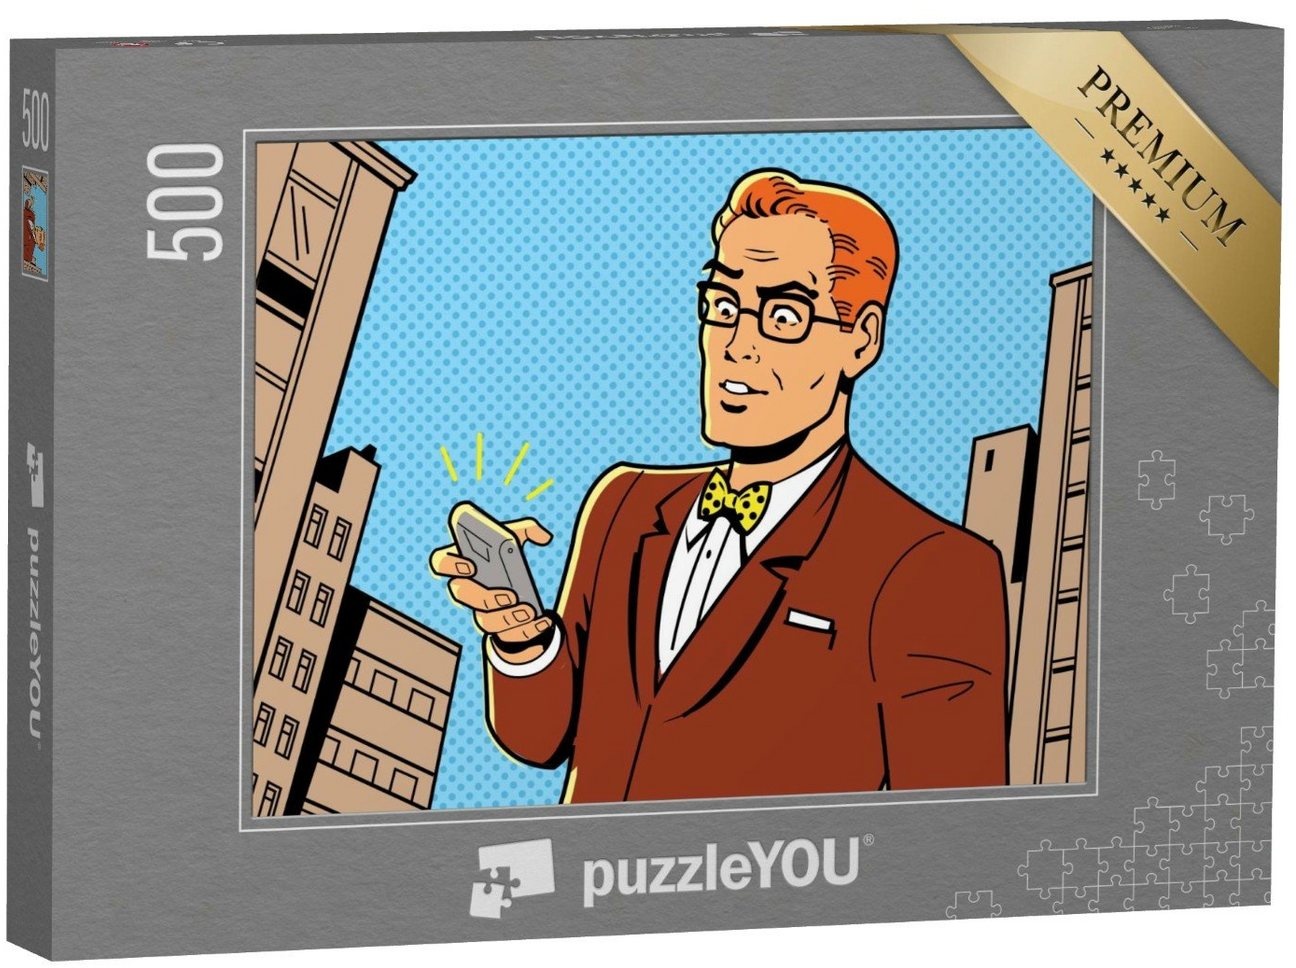 puzzleYOU Puzzle Ironische Illustration: Retro-Mann mit Smartphone, 500 Puzzleteile, puzzleYOU-Kollektionen Comic